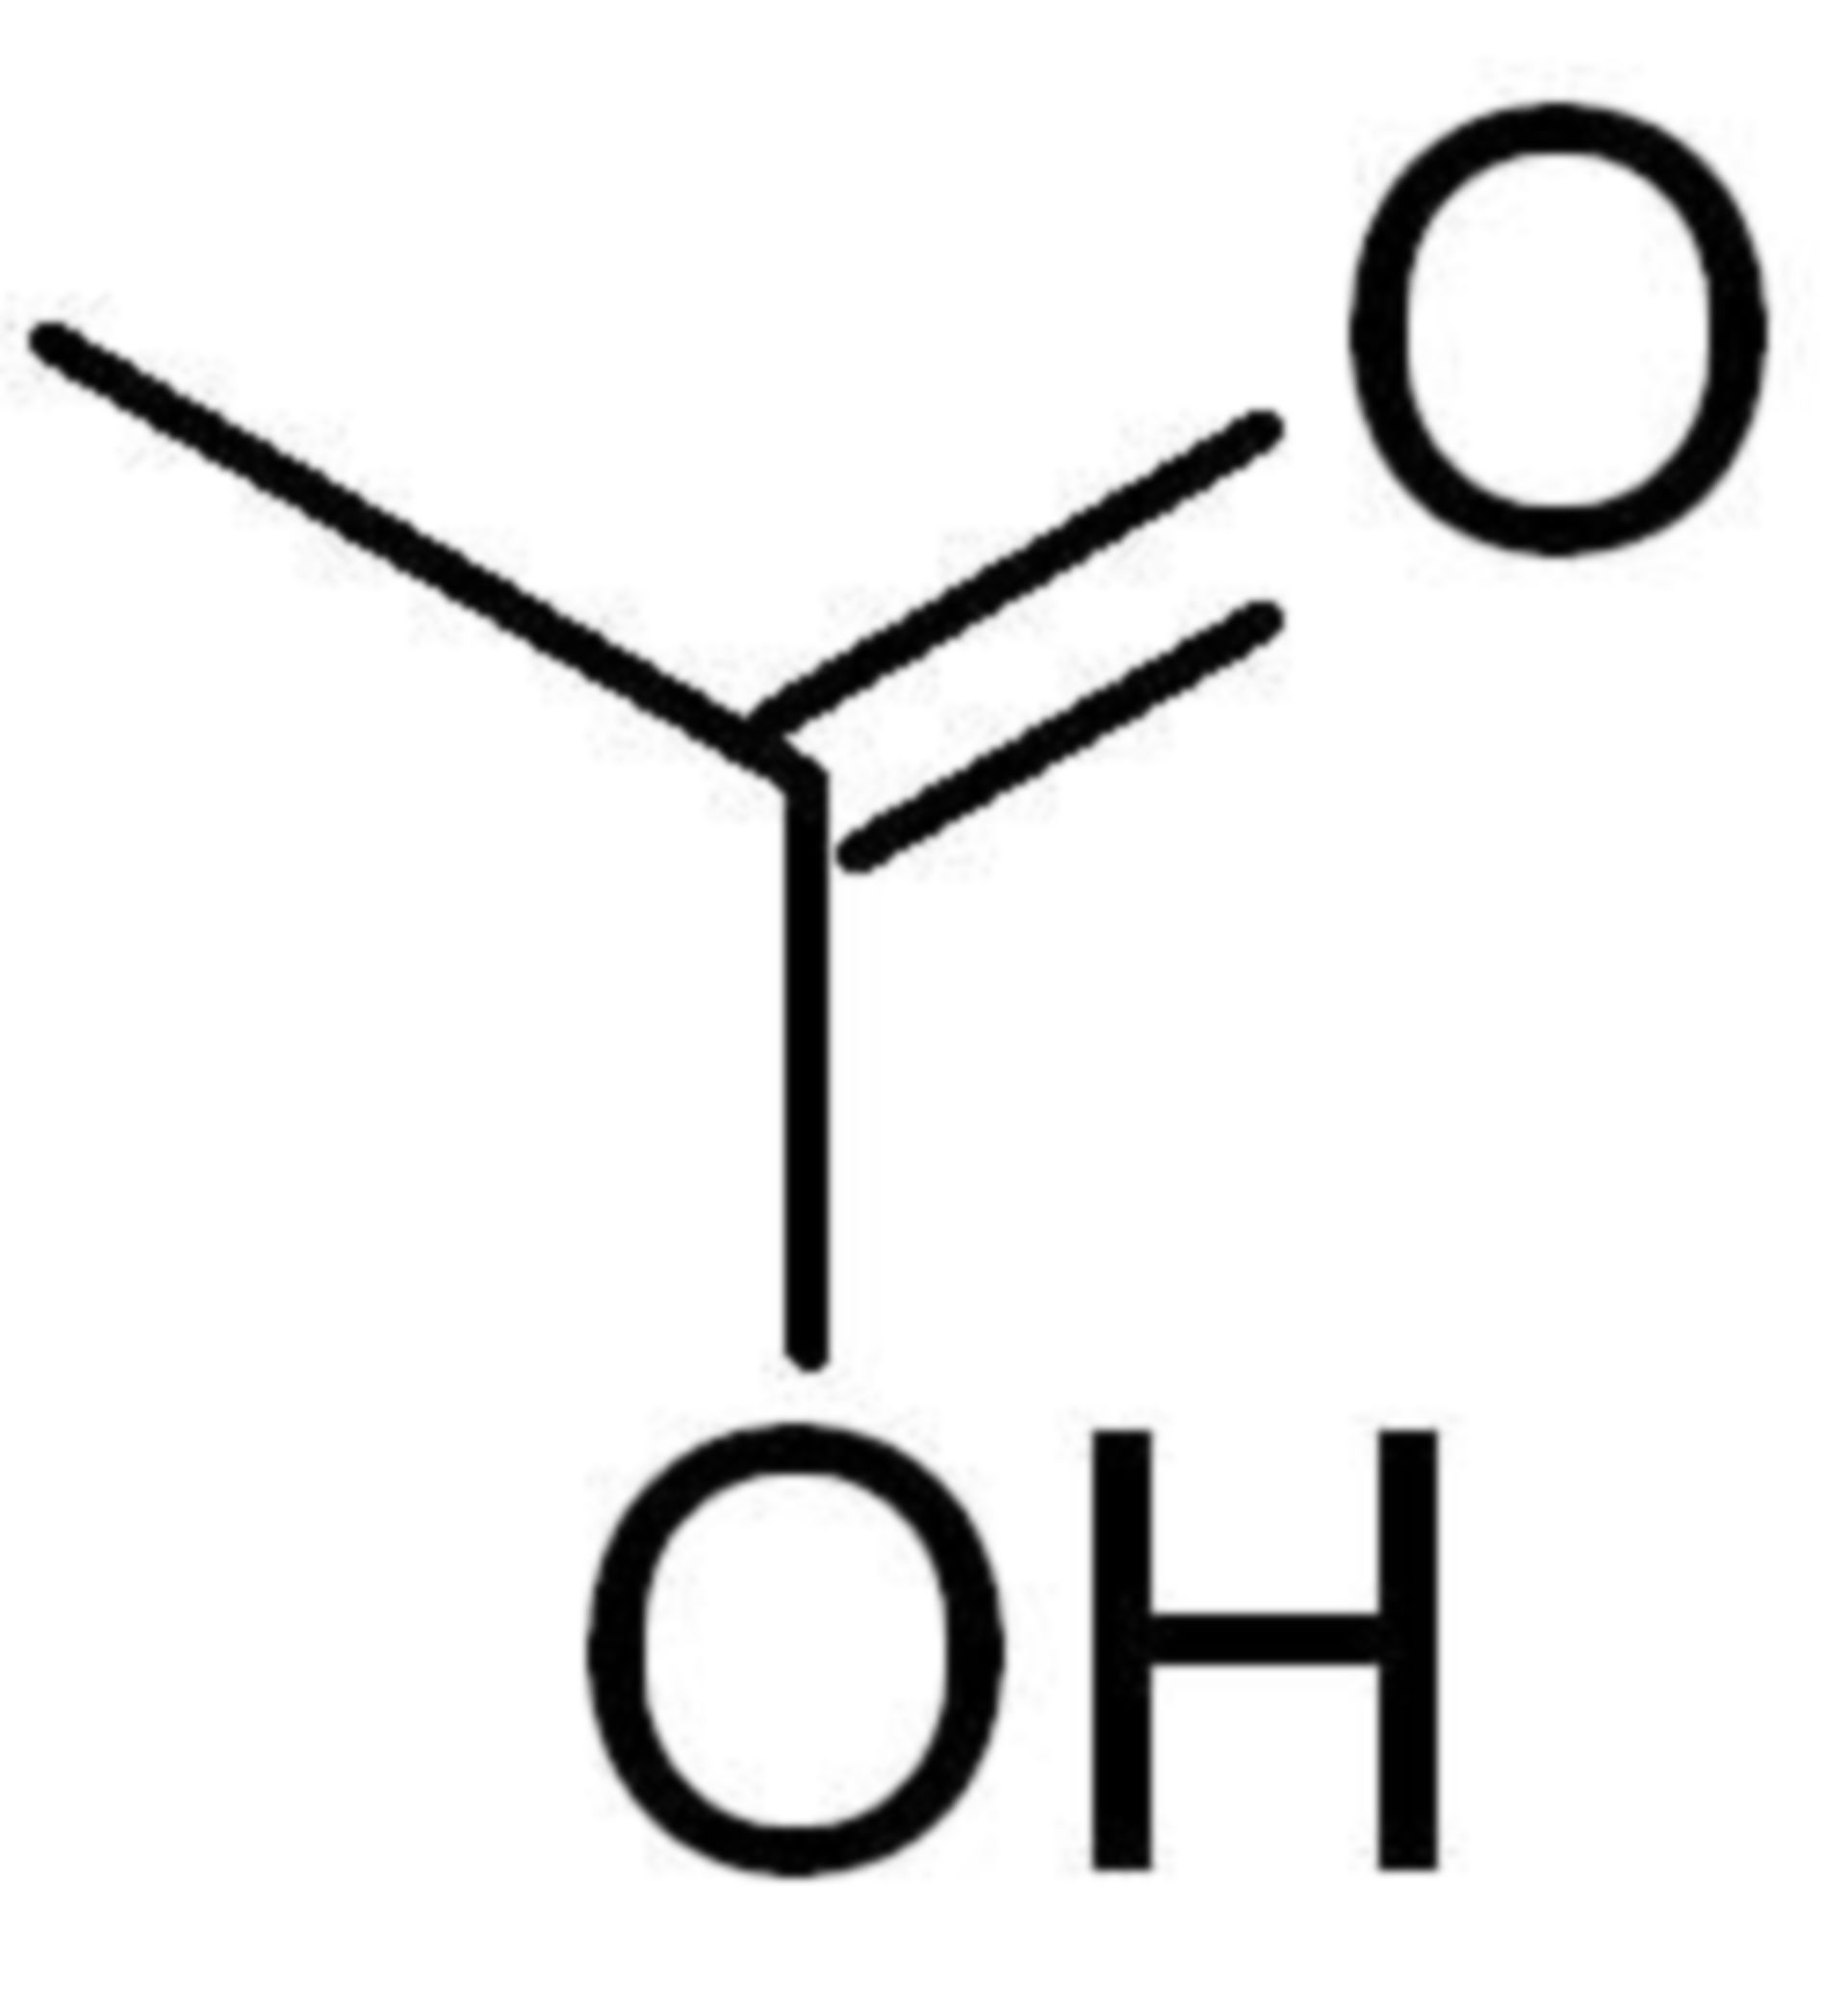 Structural formula of acetic acid